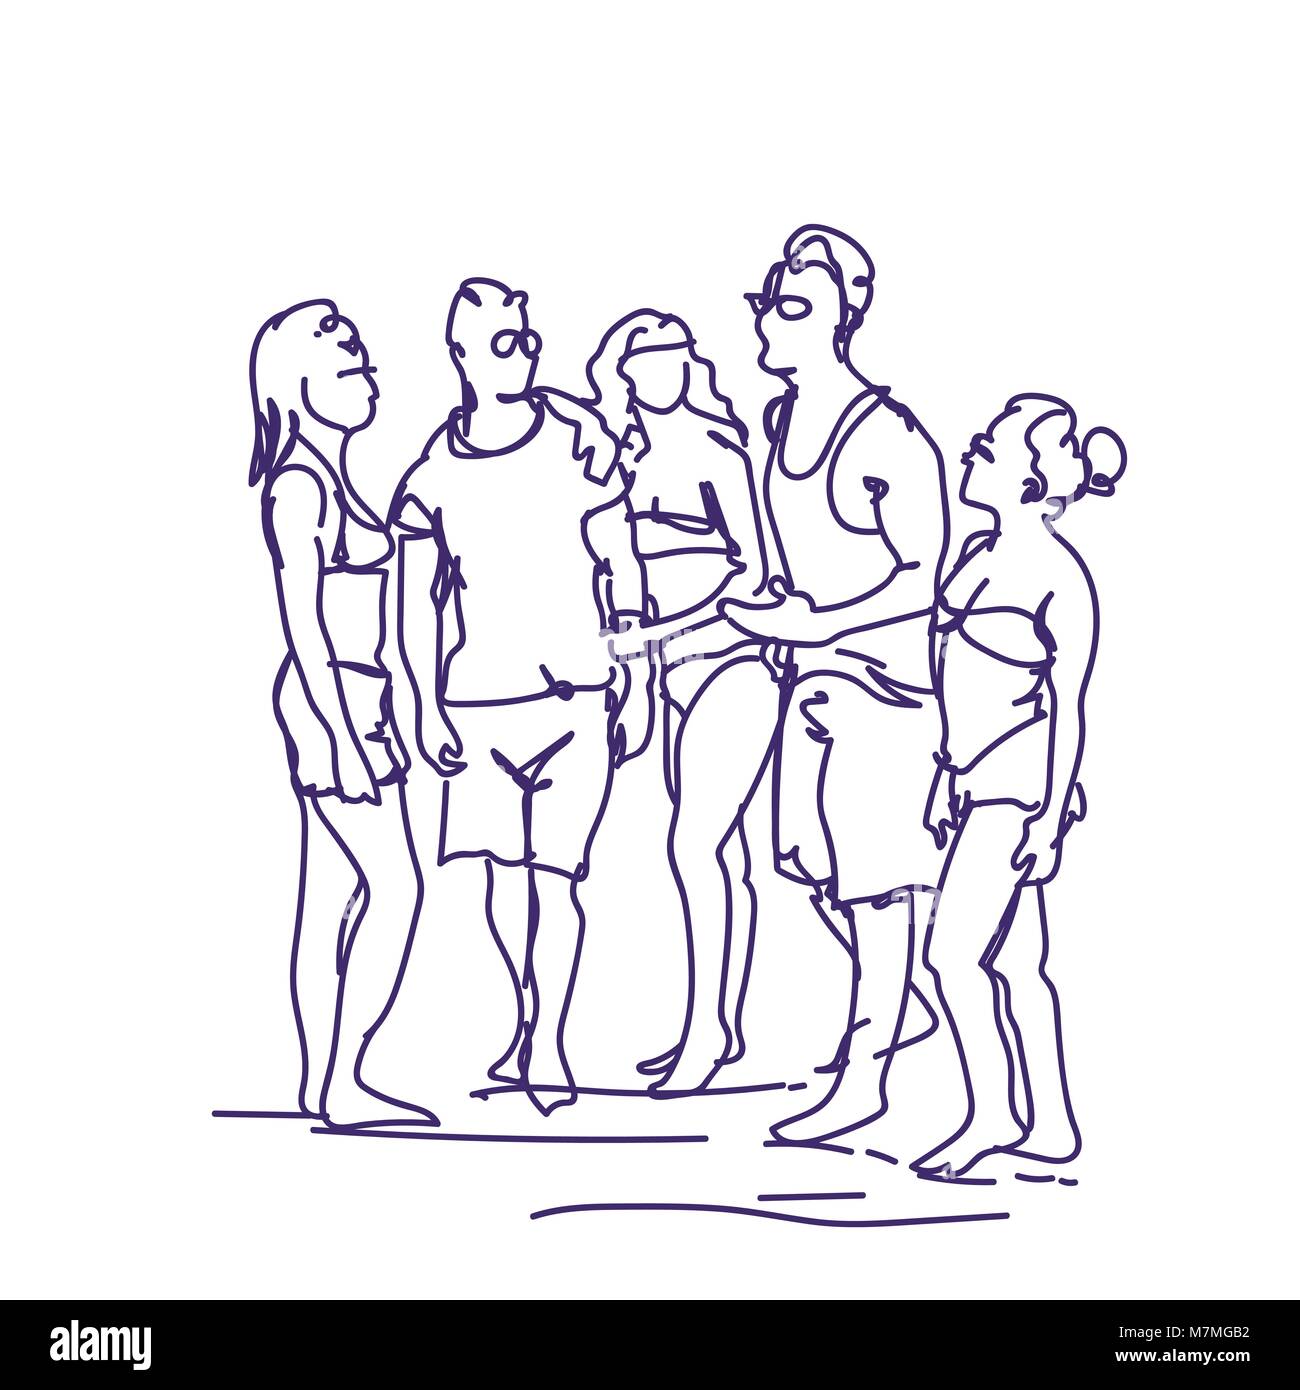 https://c8.alamy.com/comp/M7MGB2/group-of-sketch-people-talking-standing-together-doodle-men-and-women-M7MGB2.jpg